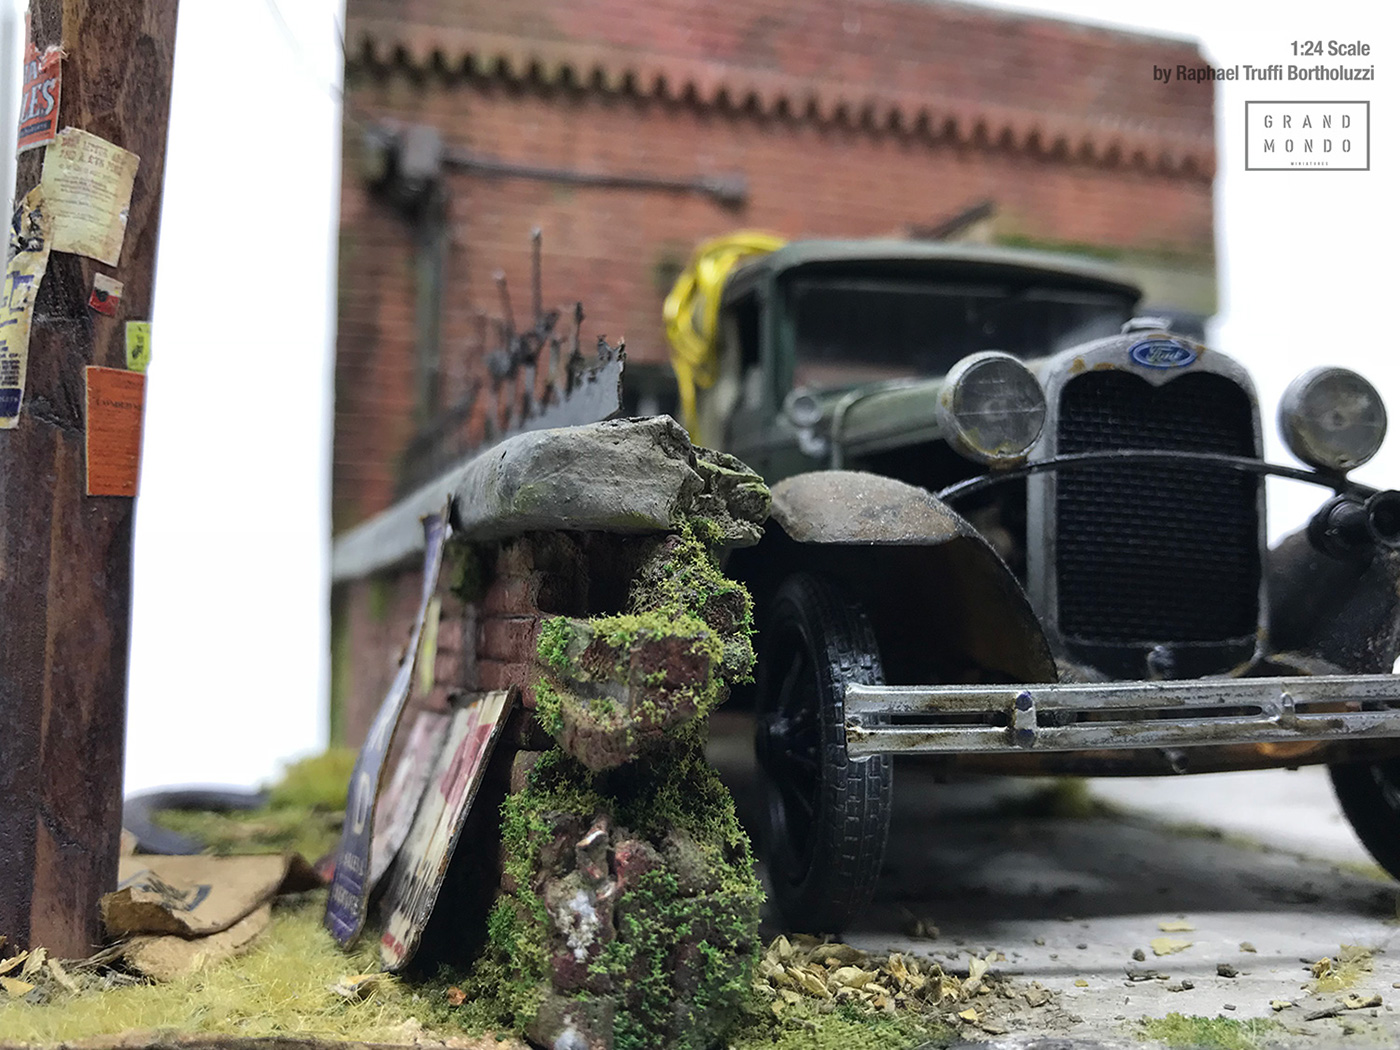 Miniature Diorama garage Ford handmade crafts   Brazil artwork abandoned antique